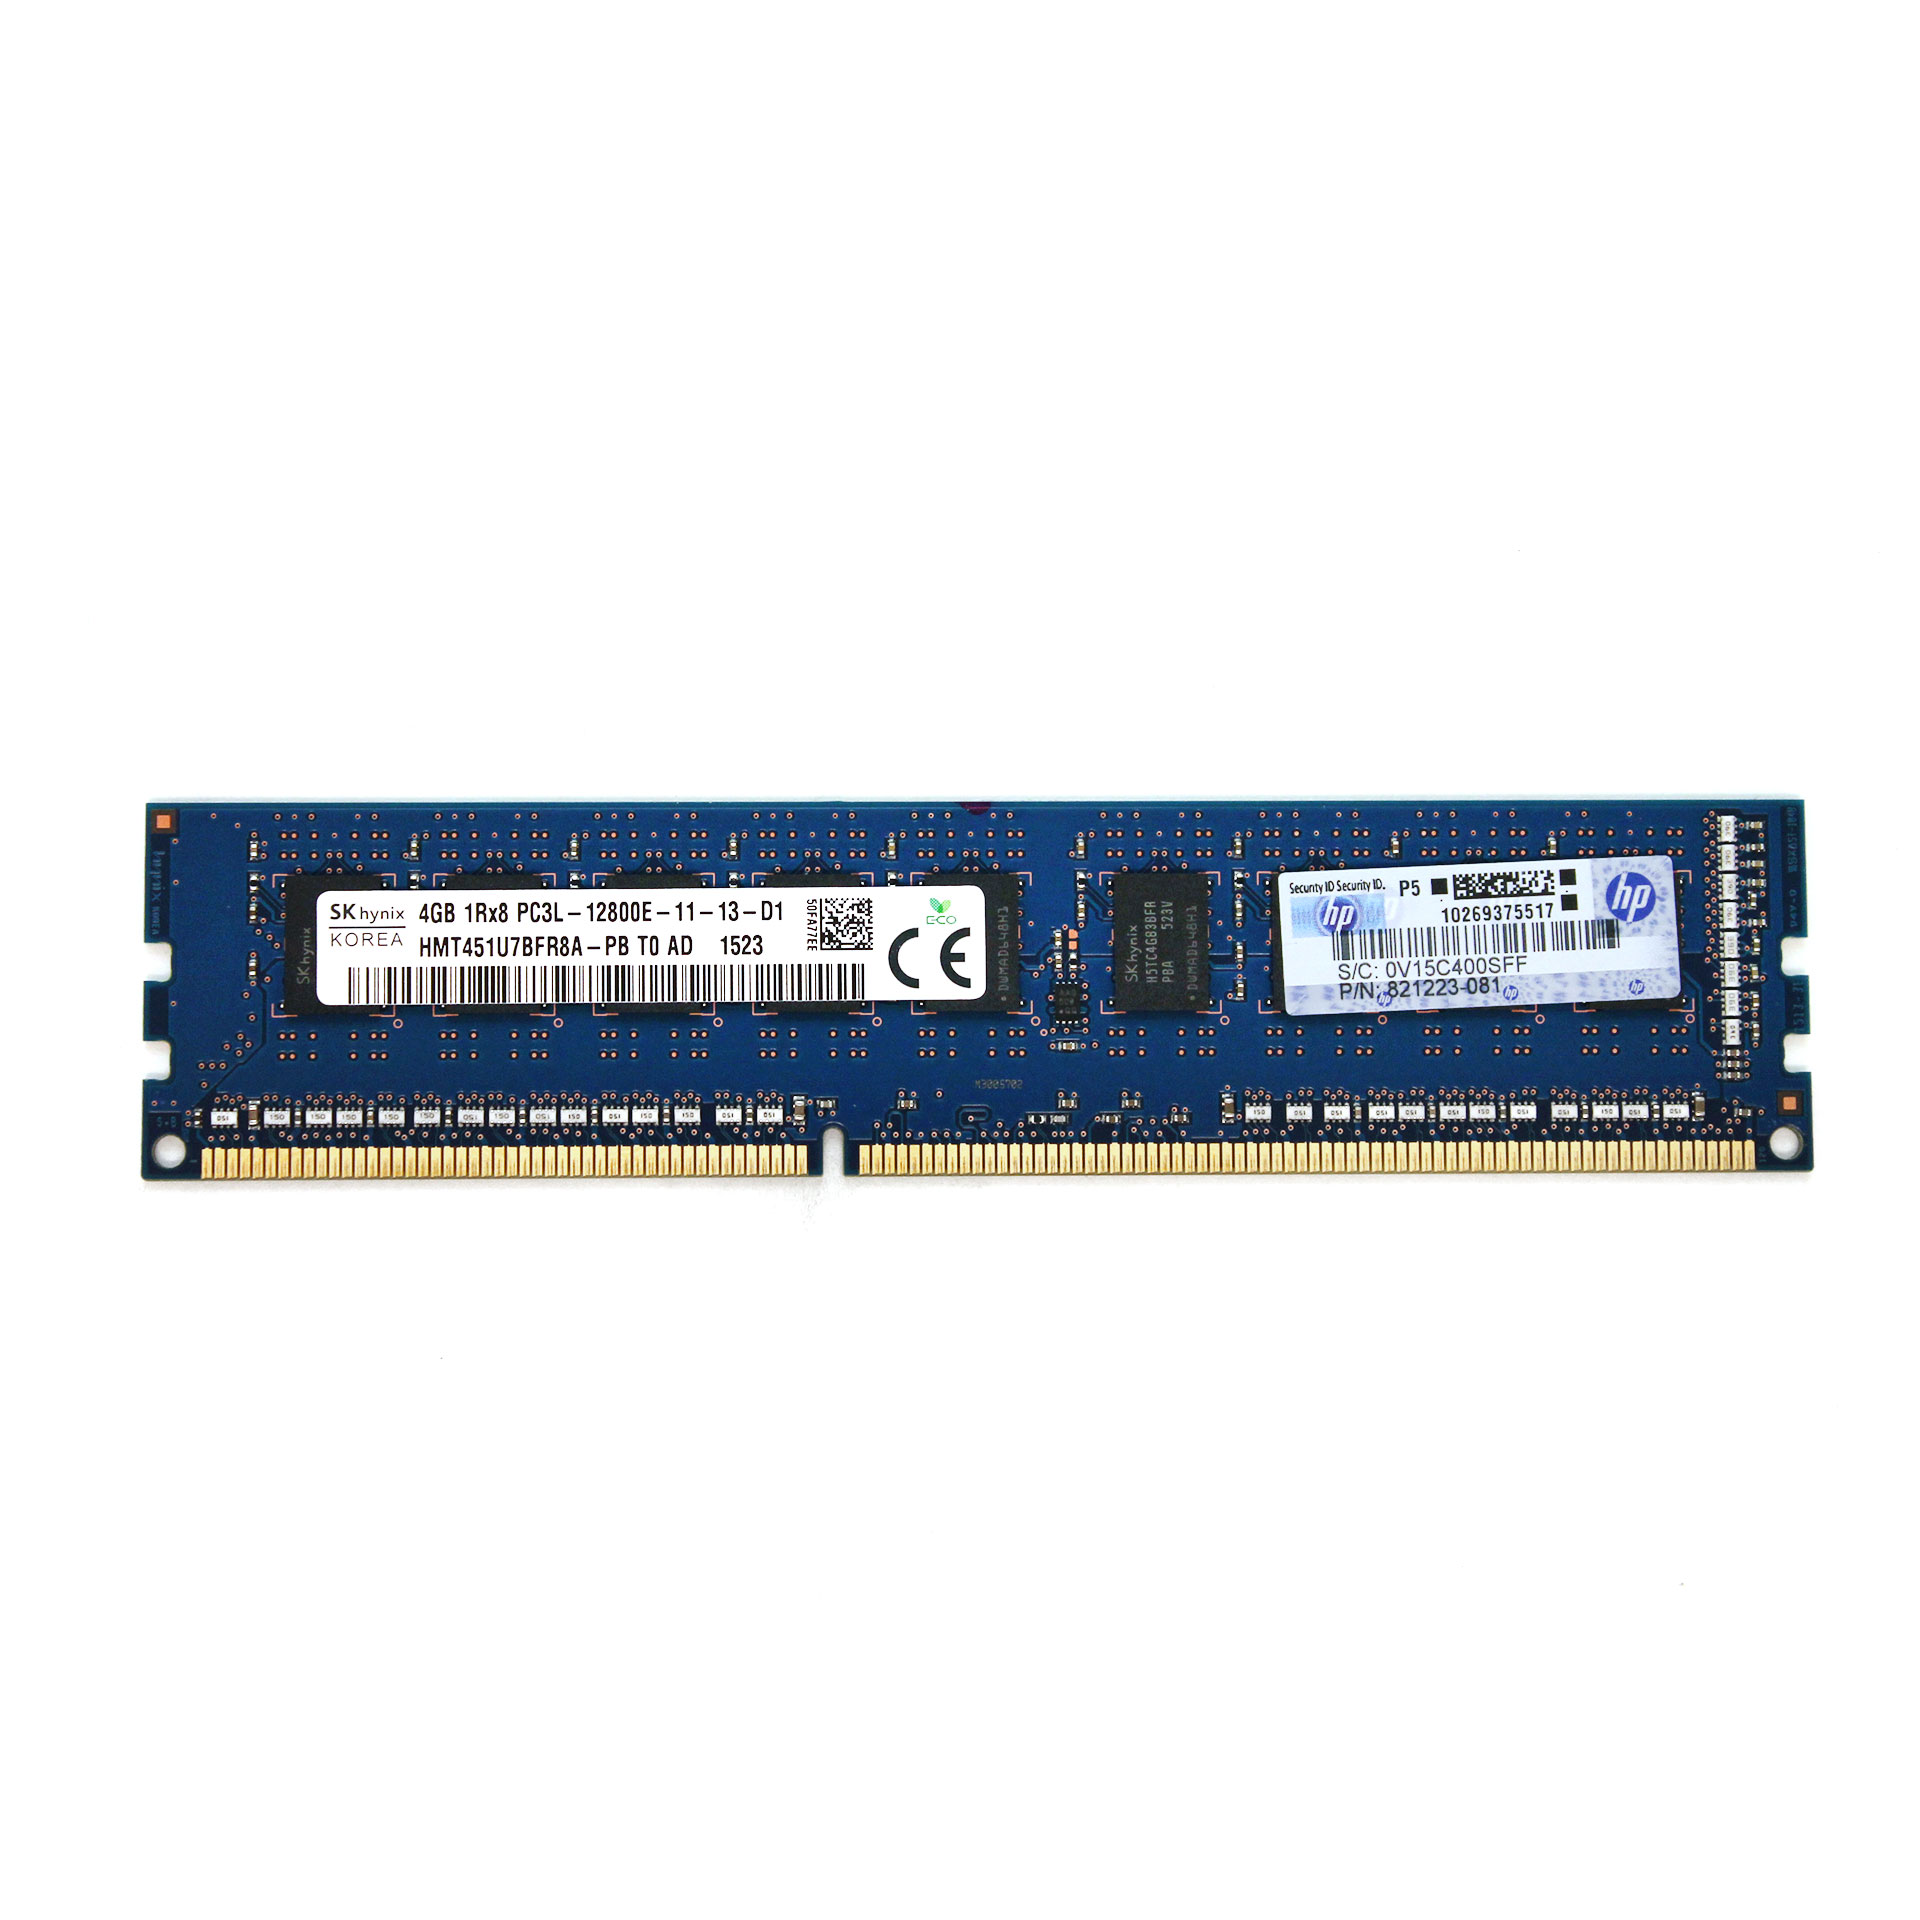 HP/Hynix 4GB RAM DDR3 PC3L-12800E ECC 821223-081 Memory Compeve Compenet HP/Hynix RAM DDR3 PC3L-12800E 821223-081 Server Memory [821223-081] - $44.00 : Professional Multi Monitor Workstations, Graphics Card Experts